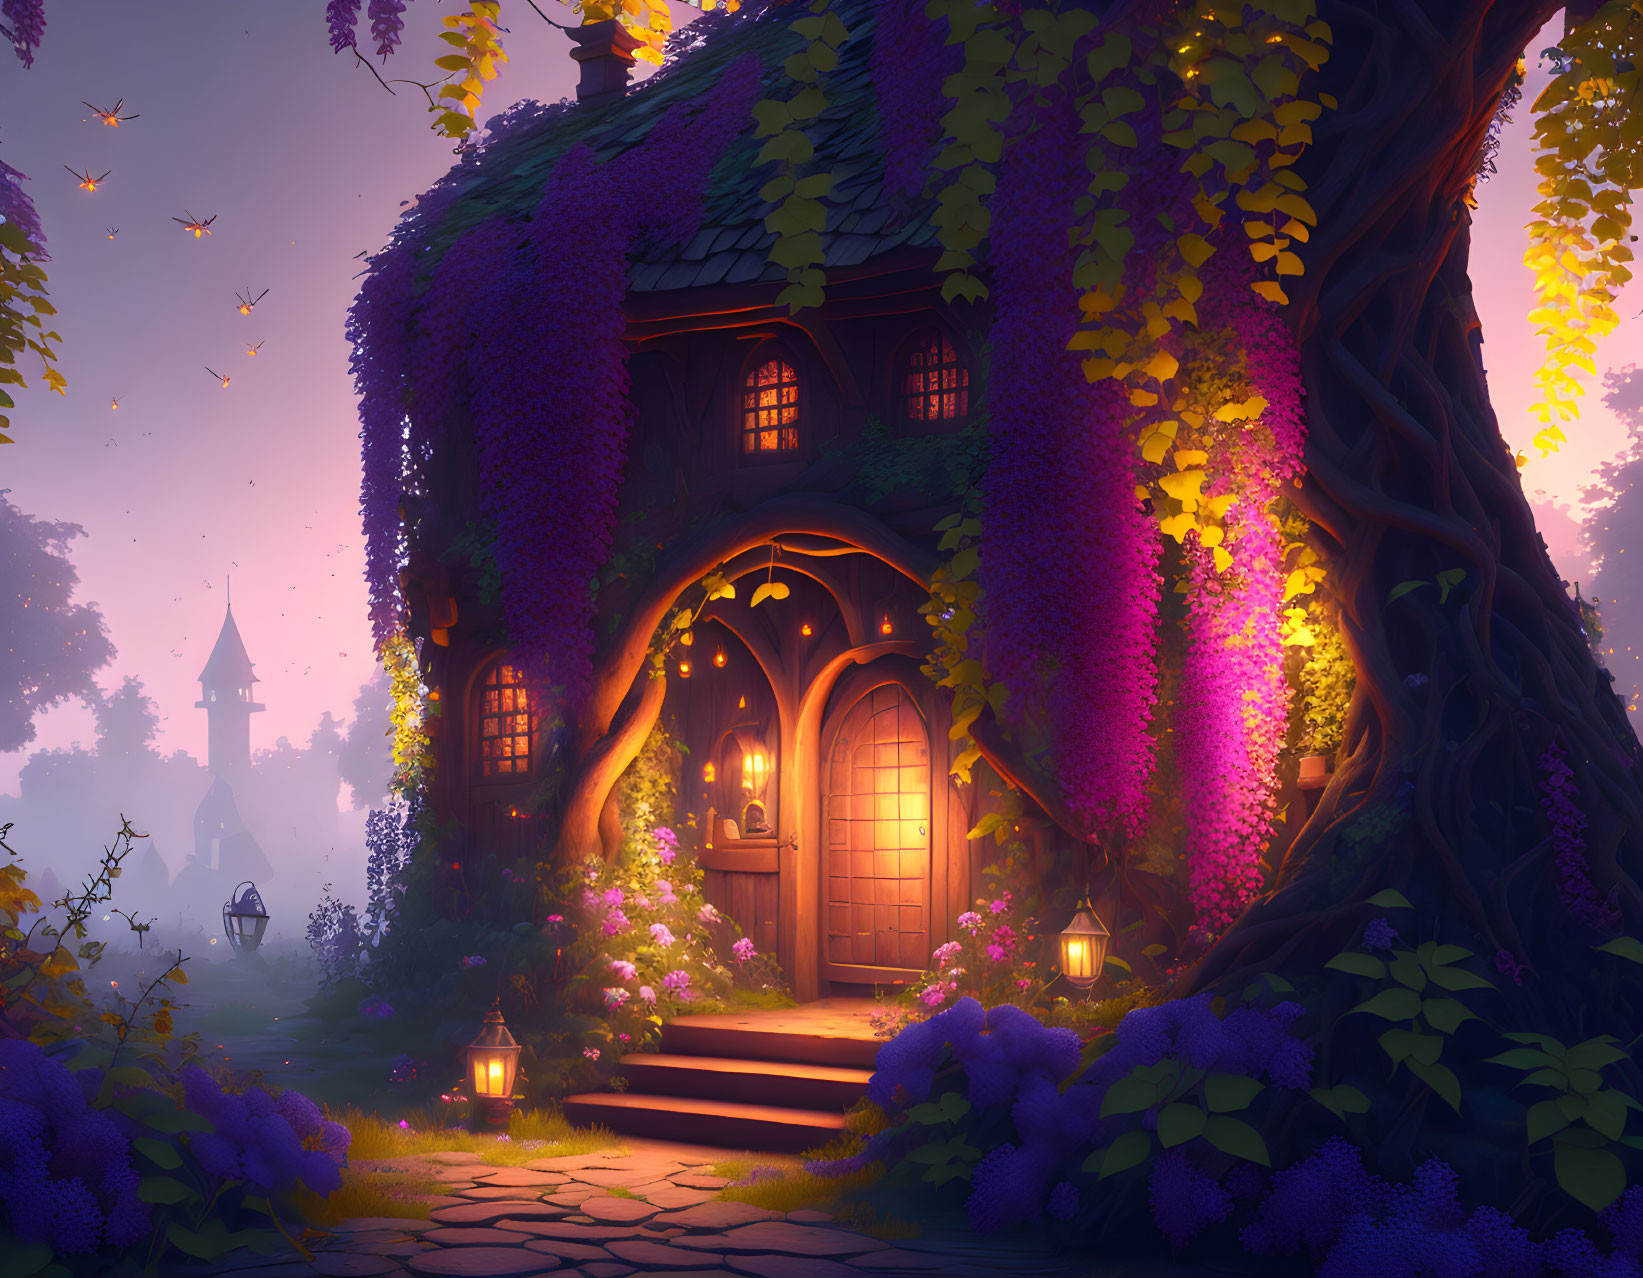 Enchanting treehouse draped in purple vines amid lush foliage